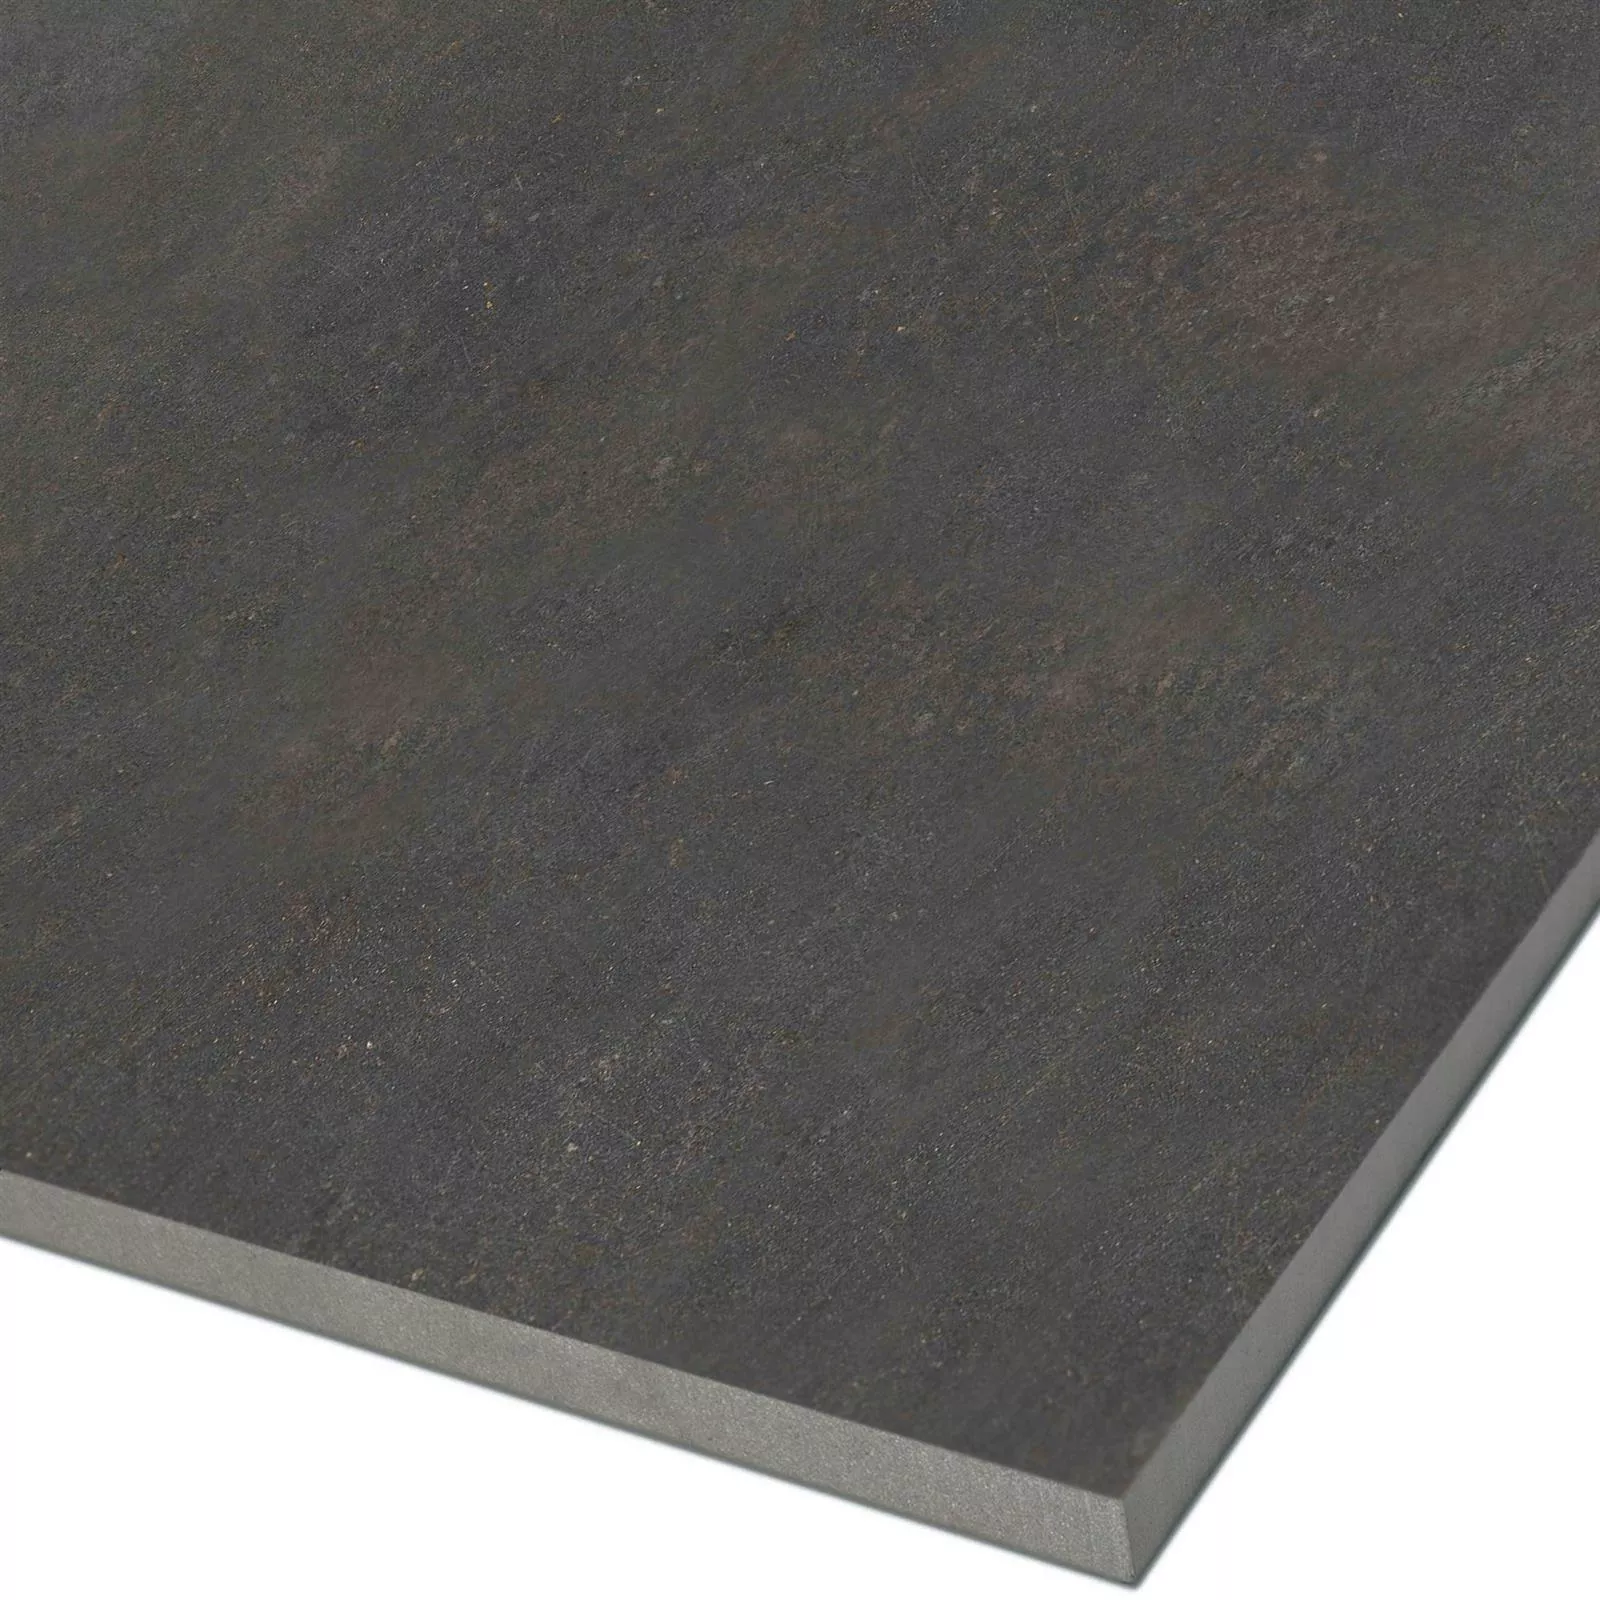 Floor Tiles Peaceway Anthracite 30x60cm